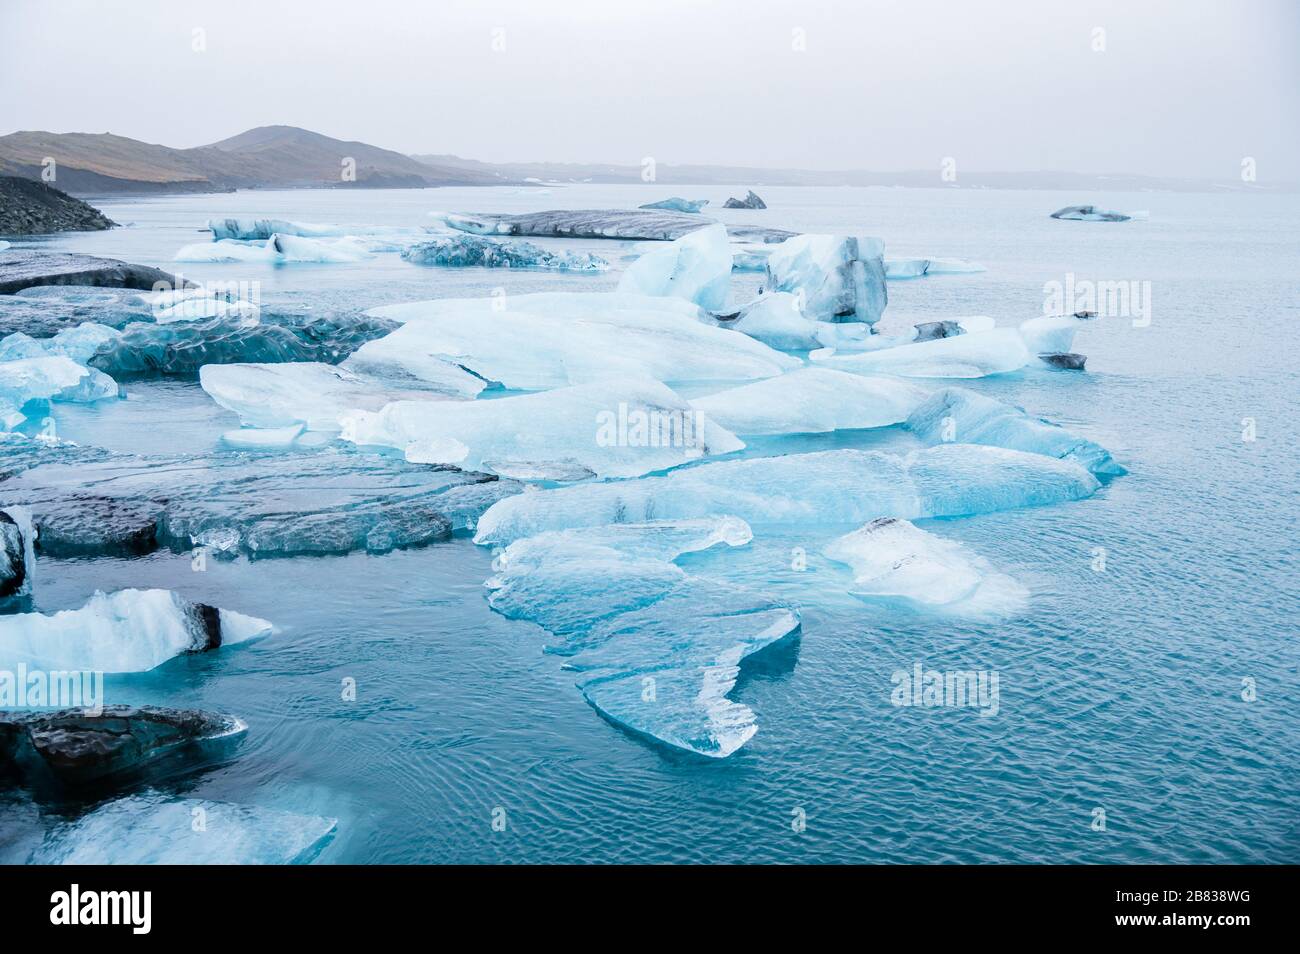 A collection of icebergs in the Jökulsárlón lagoon. Stock Photo